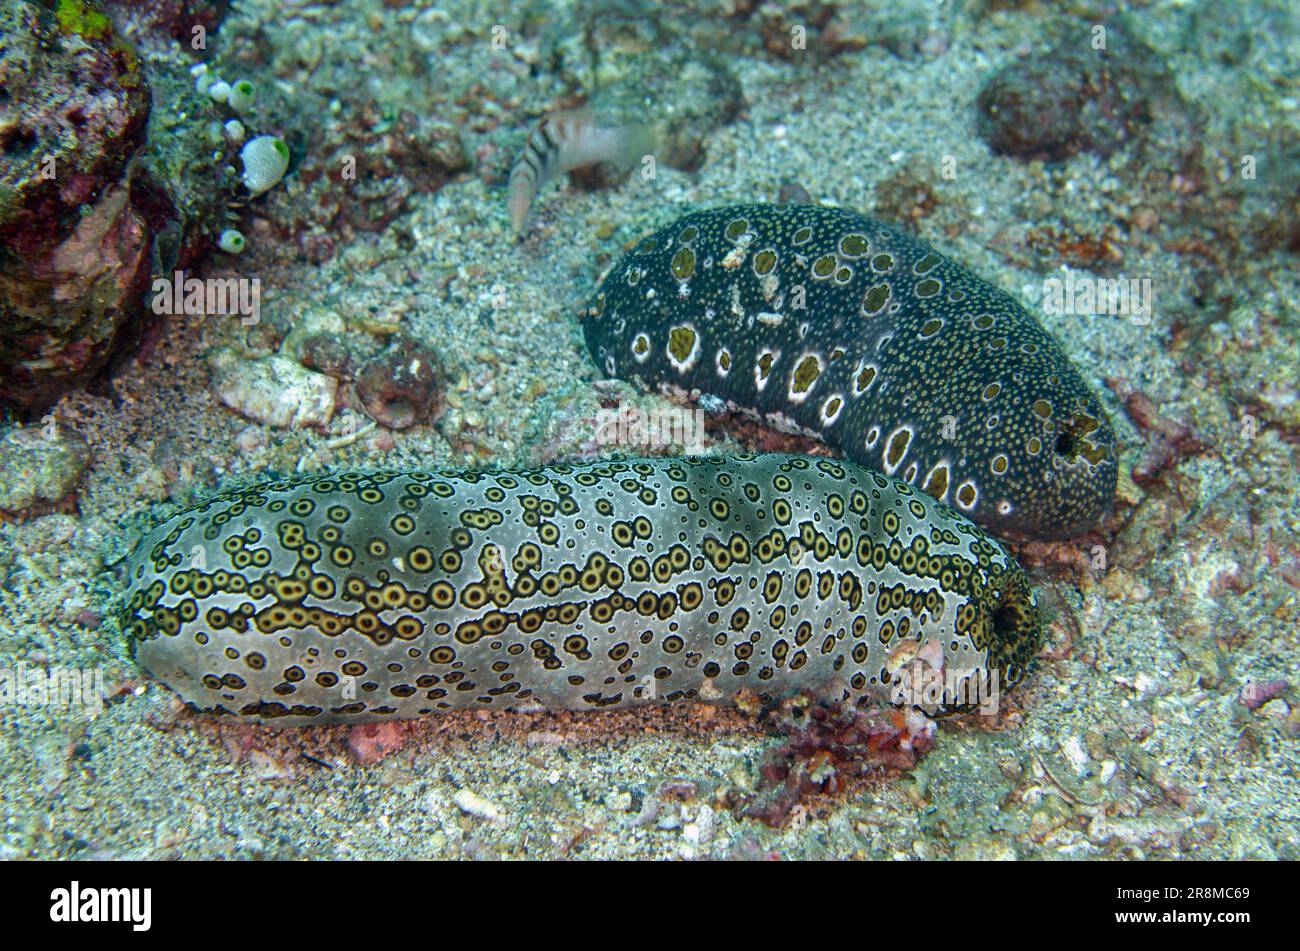 Pair of Leopard Sea Cucumbers, Bohadschia argus, Emerald dive site, Seraya, Karangasem, Bali, Indonesia, Indian Ocean Stock Photo